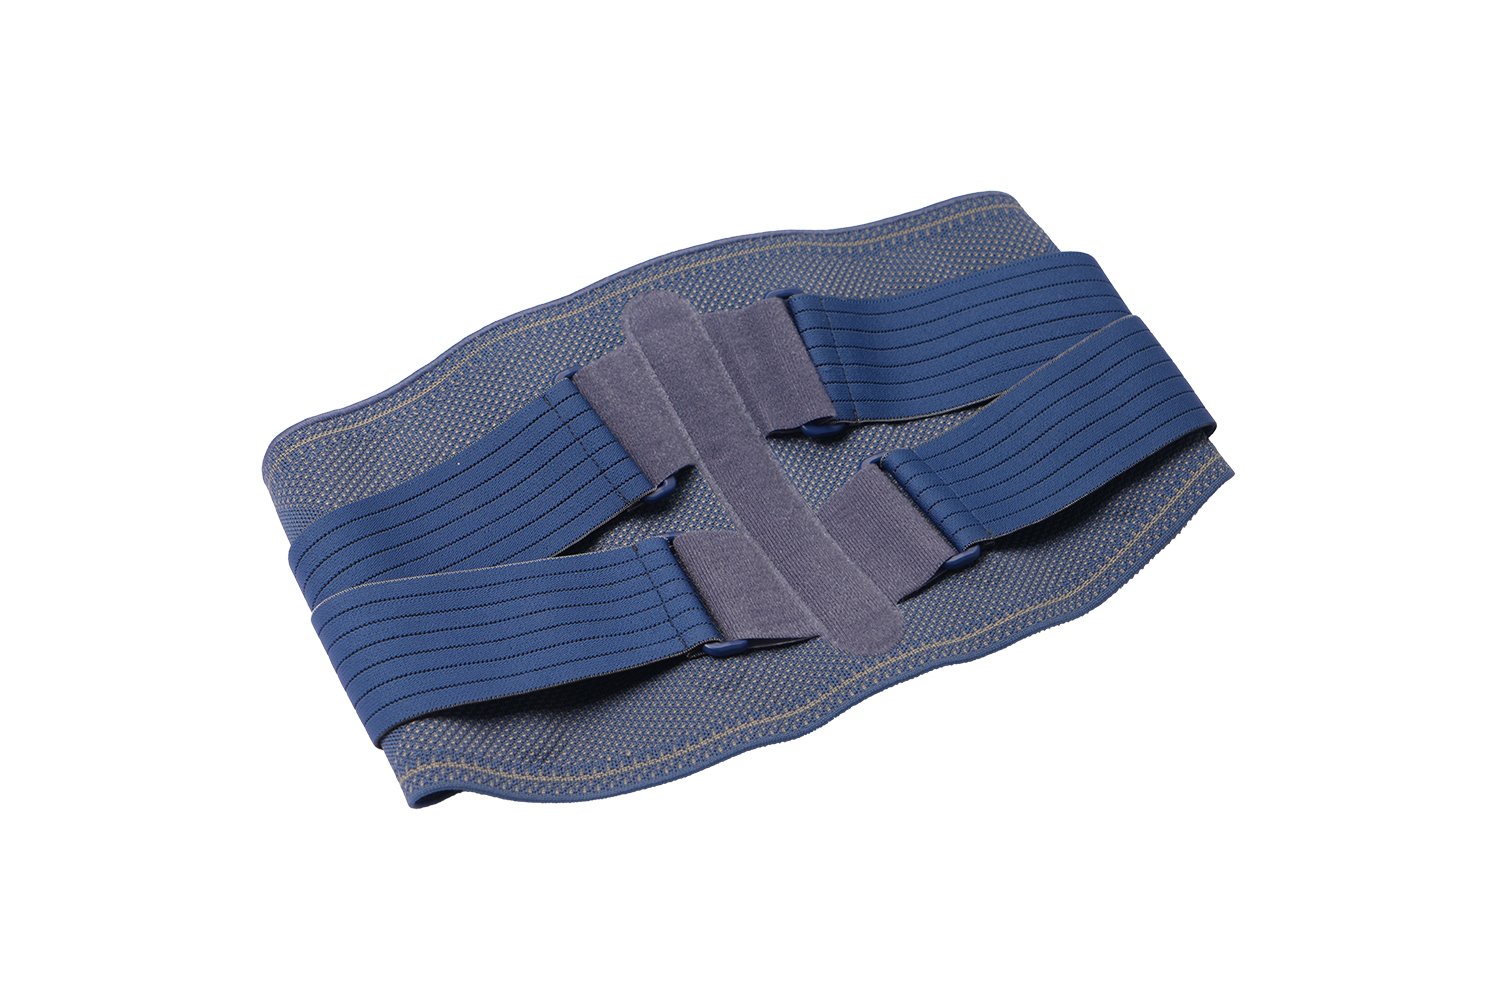 Neoprene Double Pull Lumbar Support Adjustable waist support belt for men/women